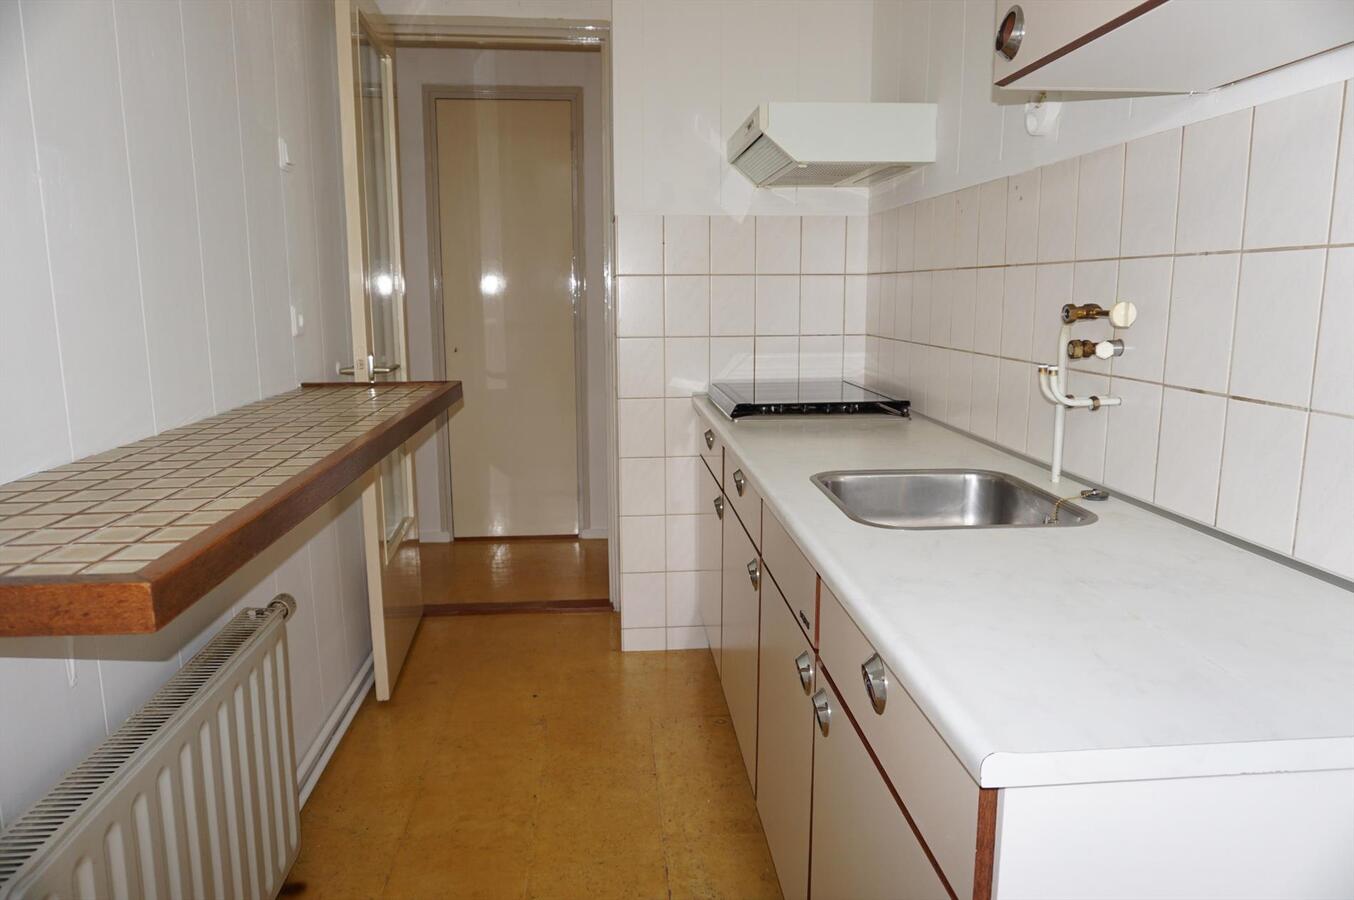 Appartement verkocht in Alblasserdam